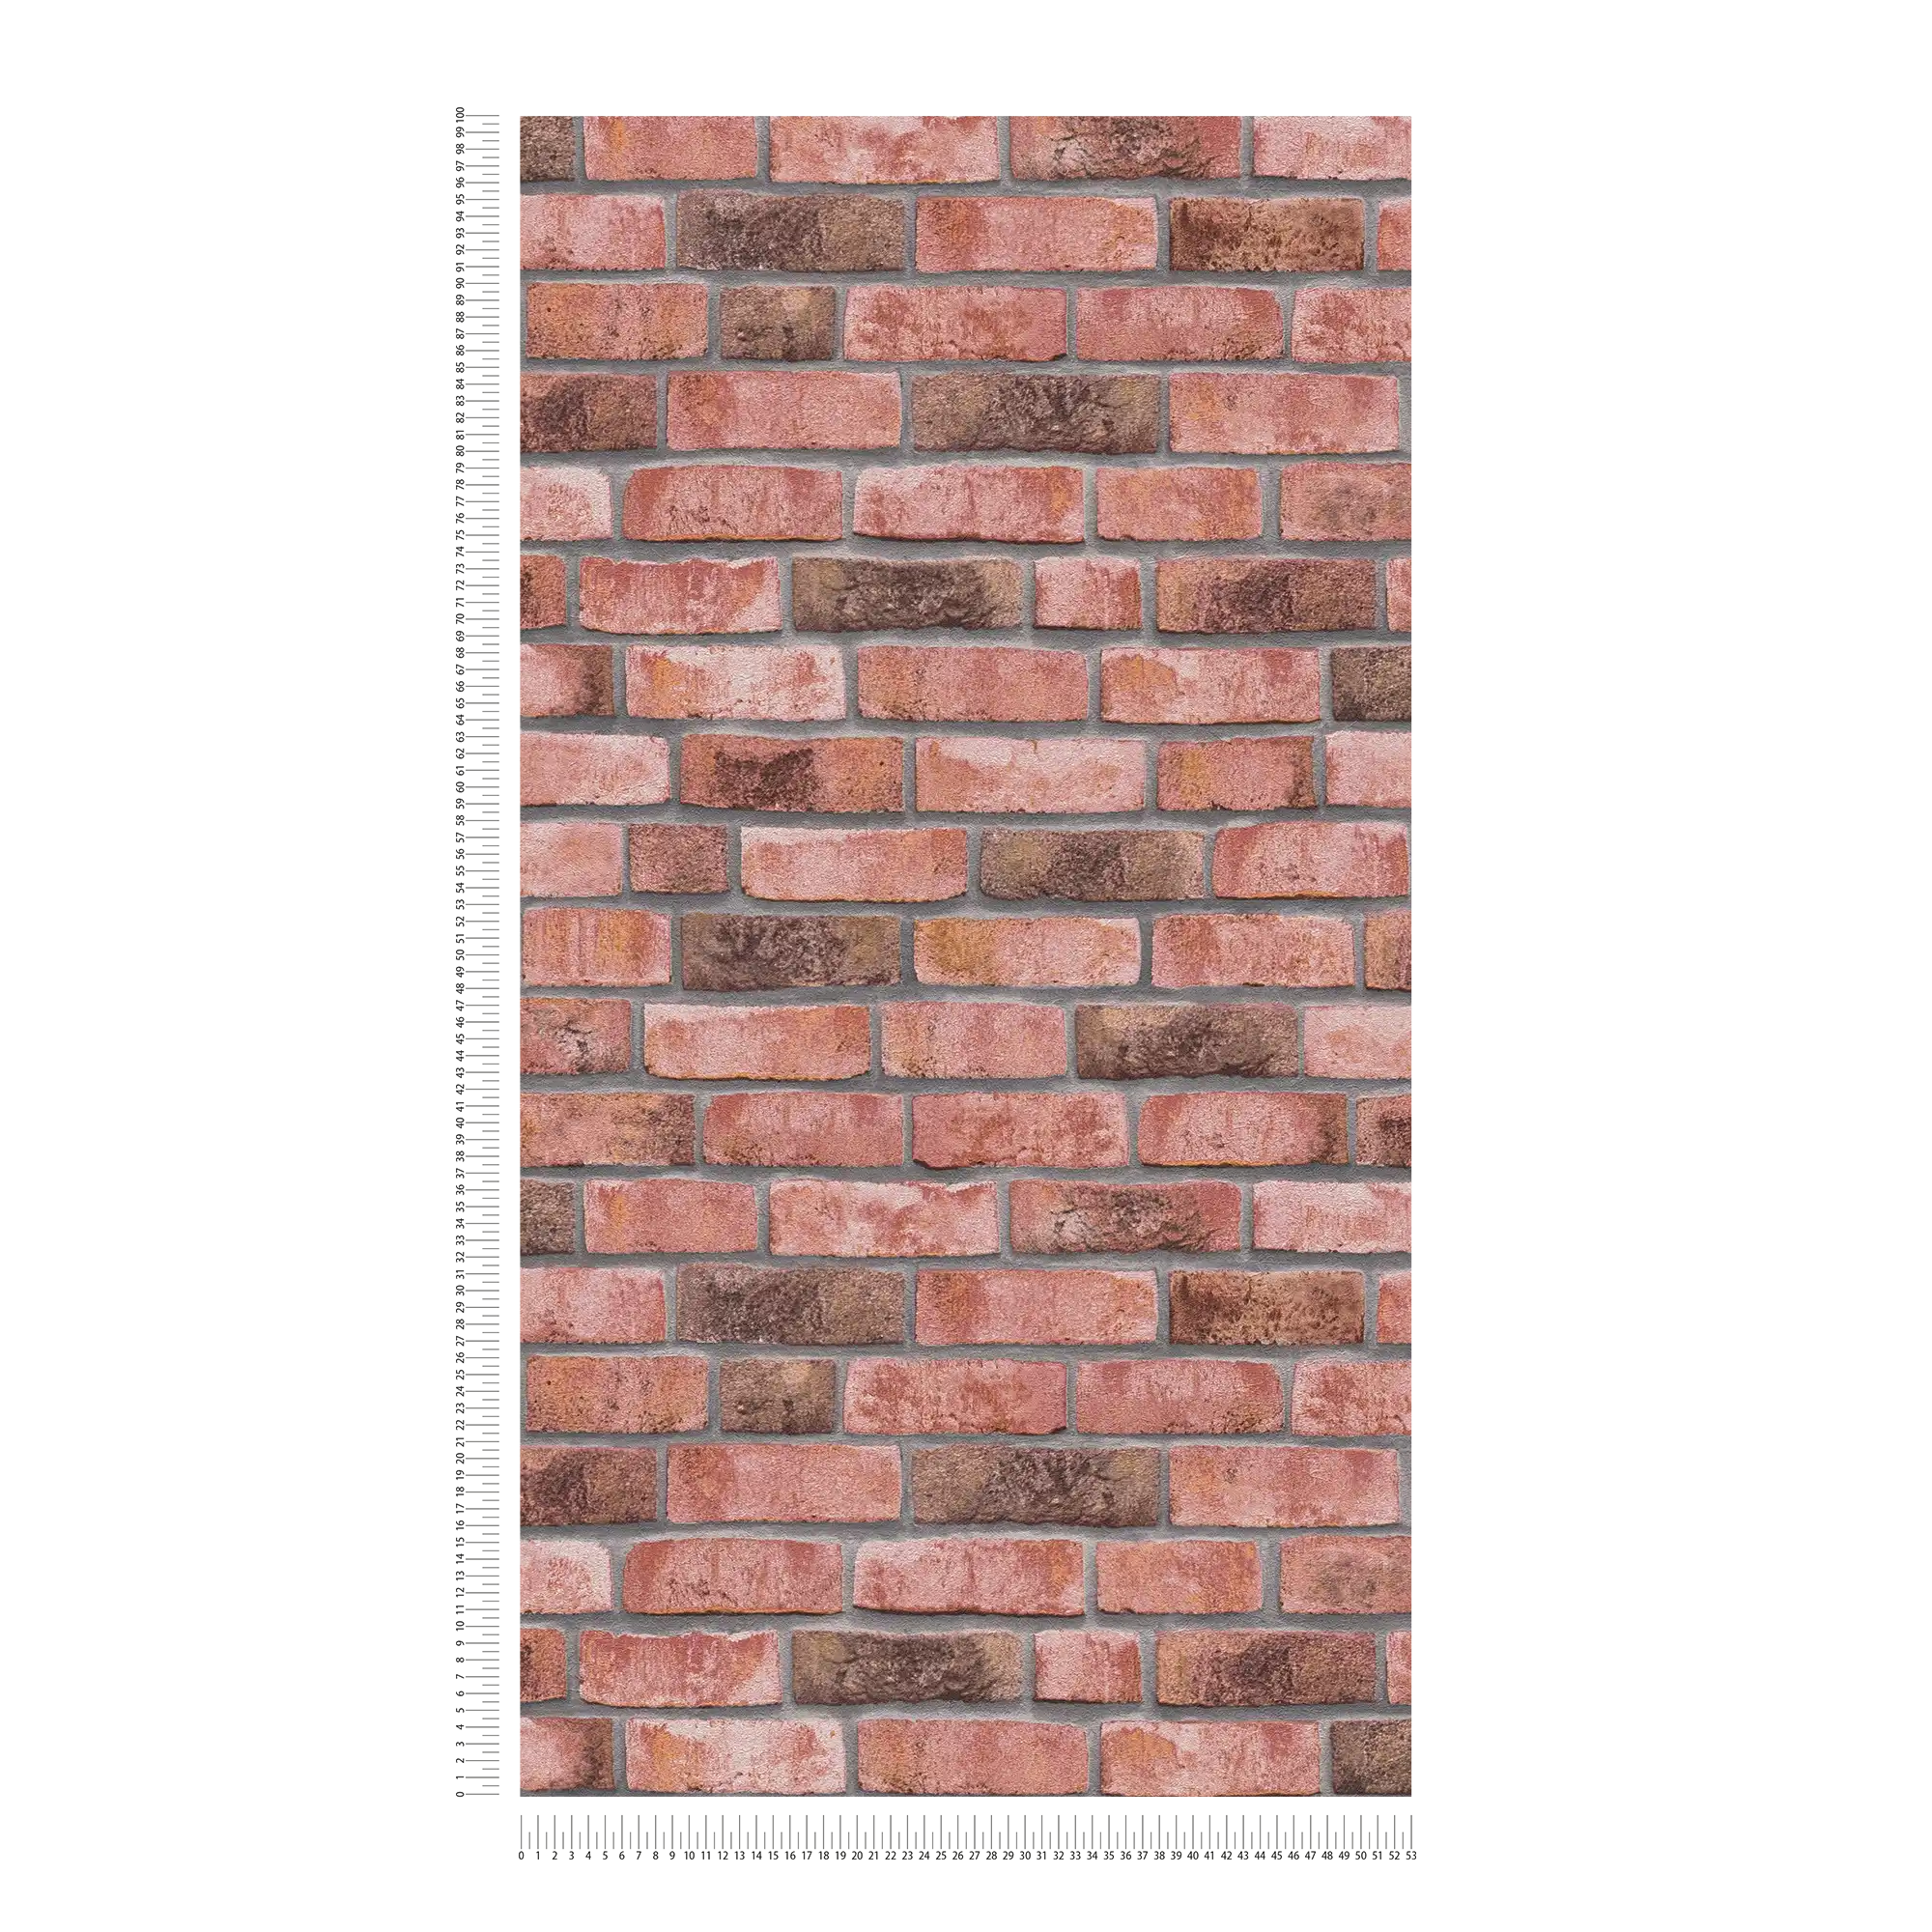             Steinoptik Tapete mit Maueroptik – Rot, Grau
        